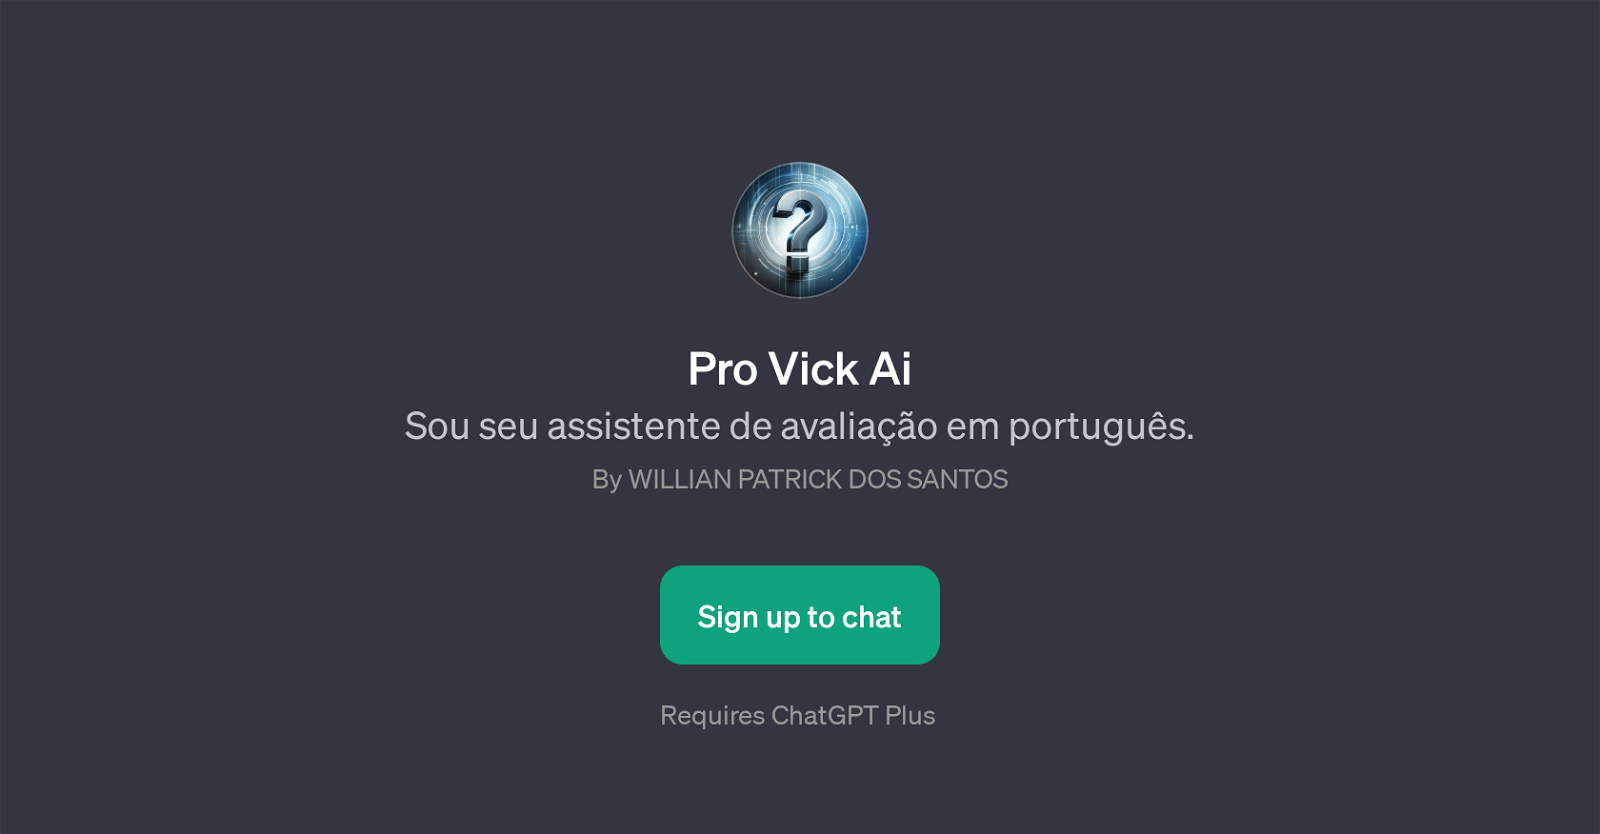 Pro Vick Ai website